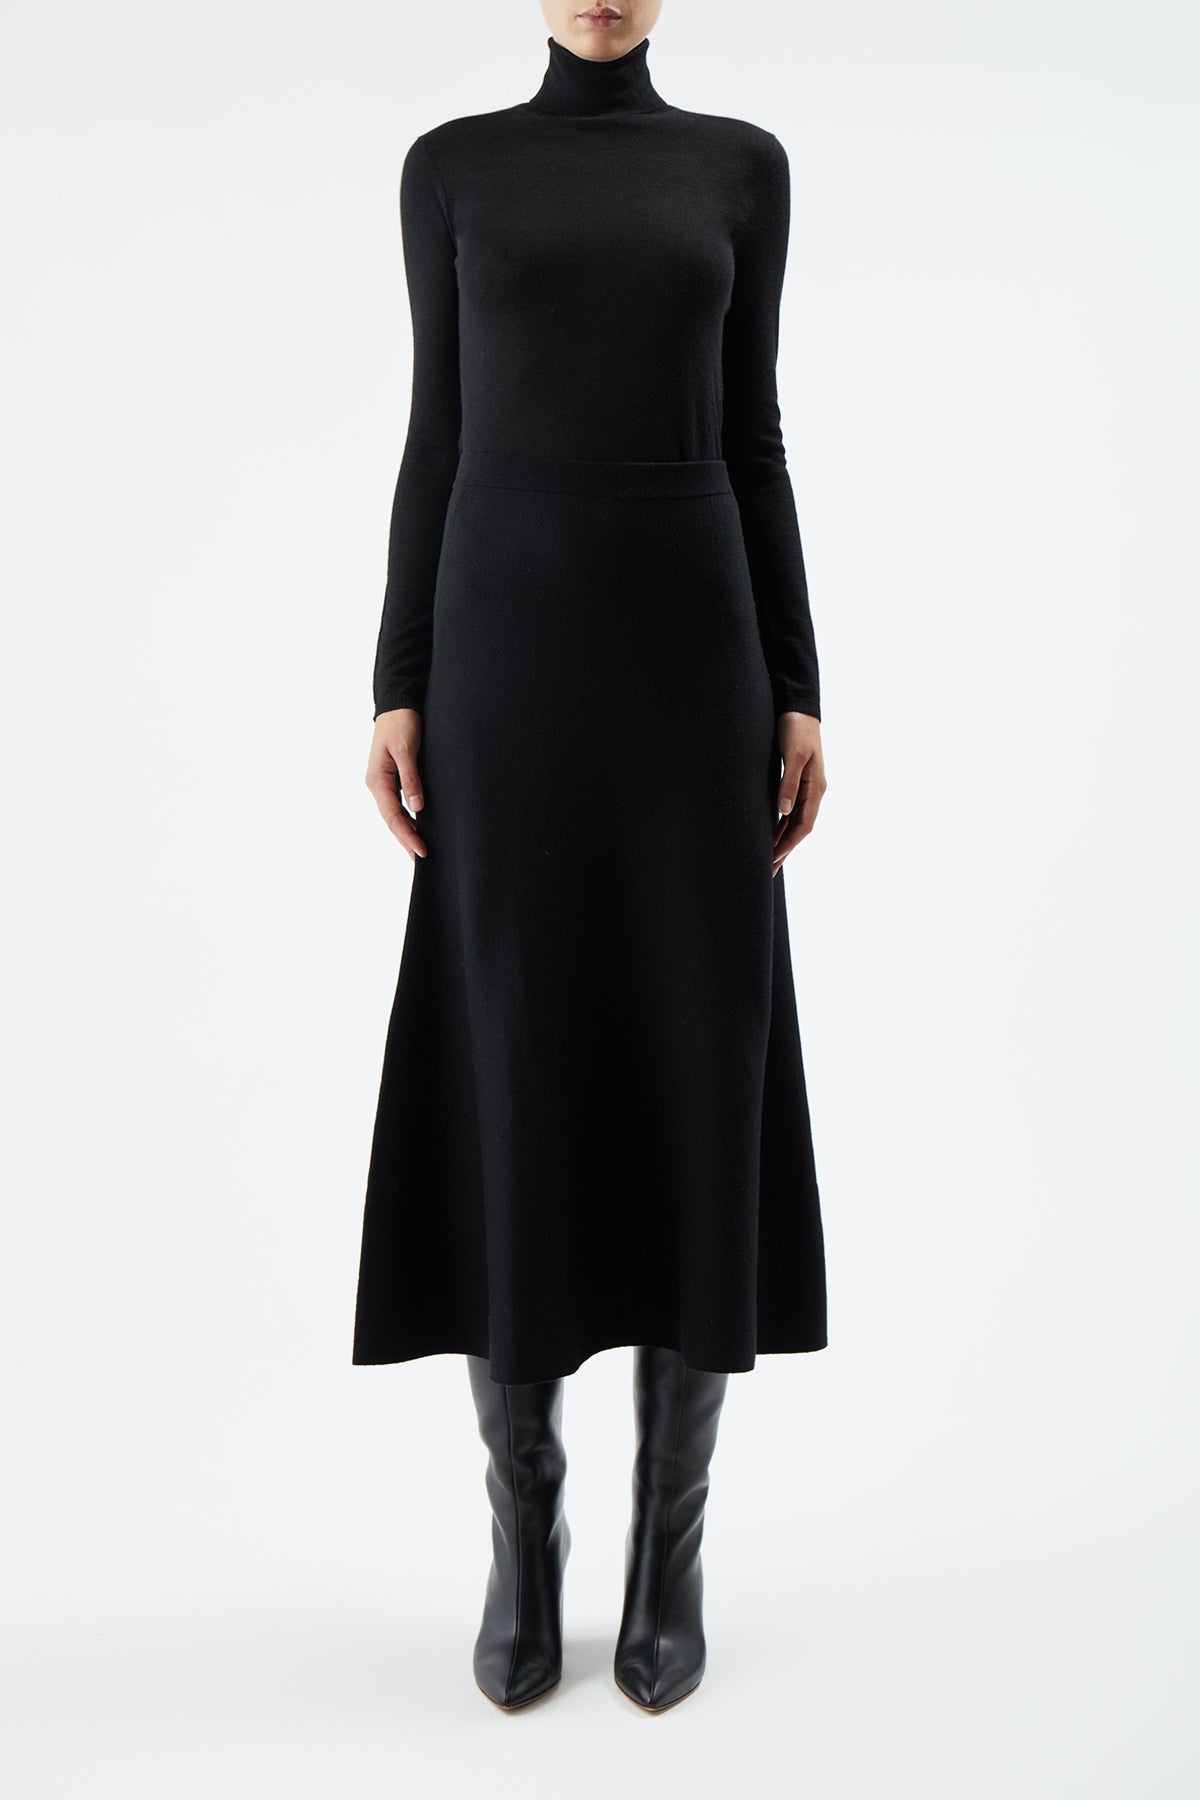 Freddie Skirt in Black Cashmere Wool - 2